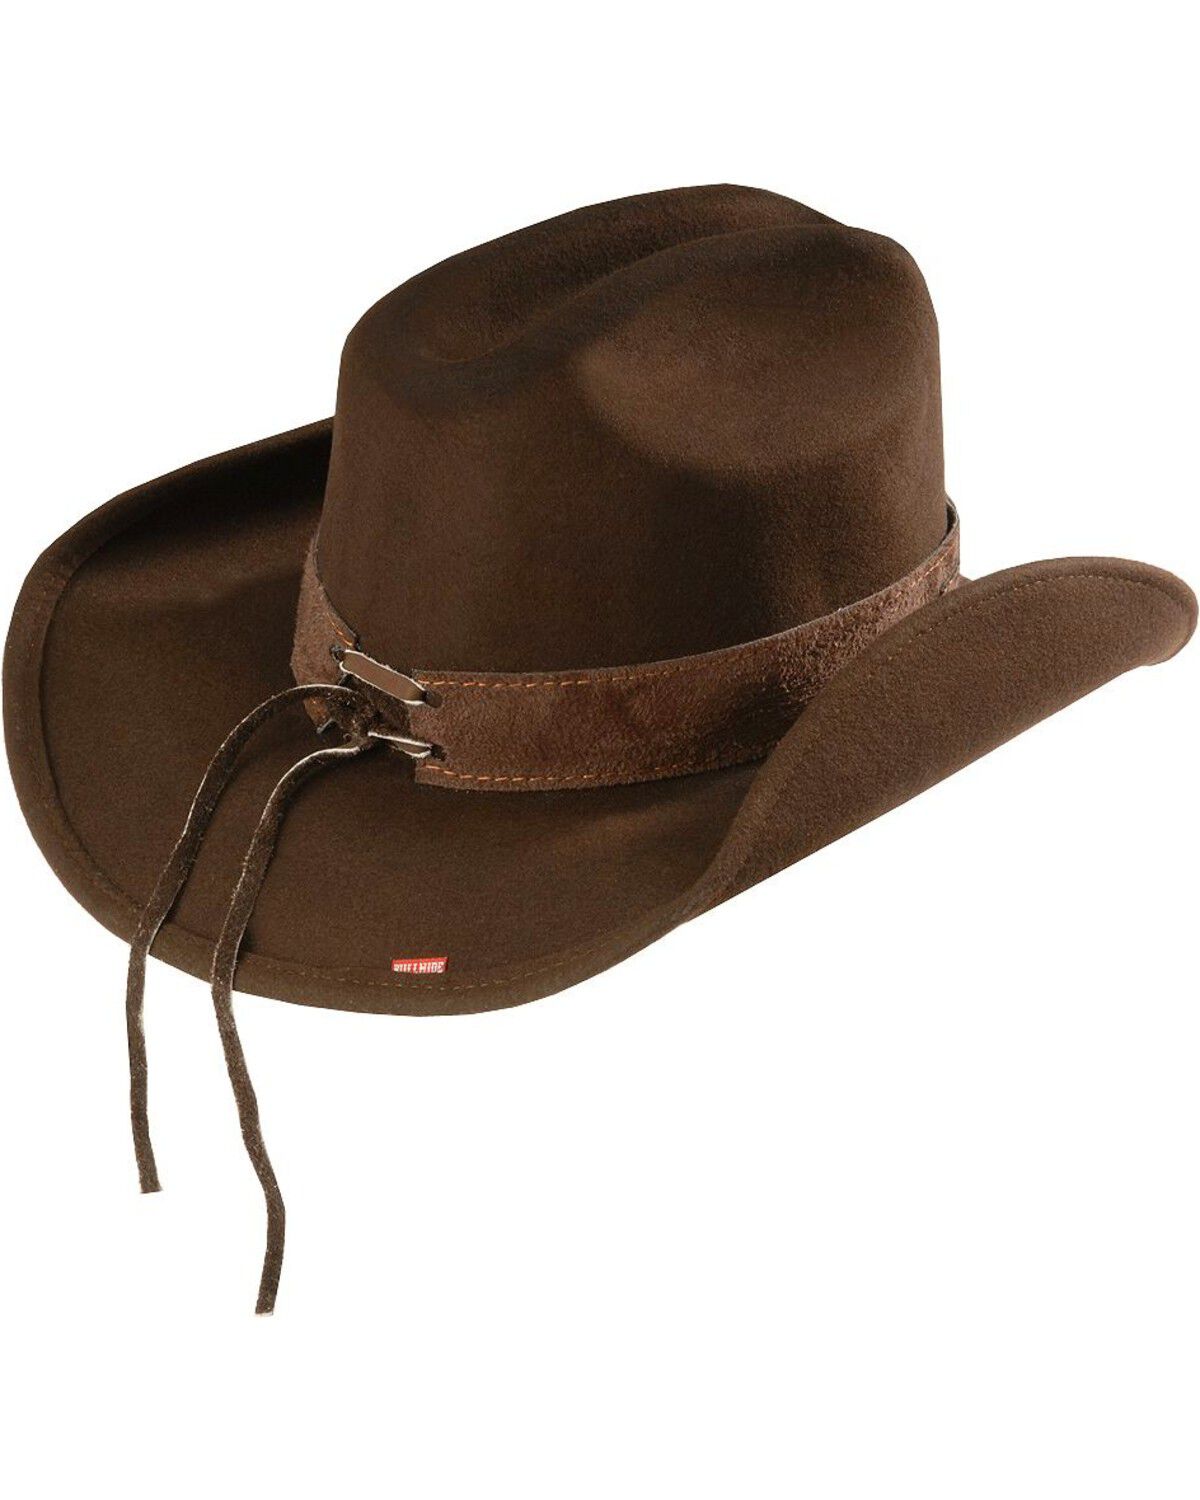 Toddler Cowboy Hat Size Chart